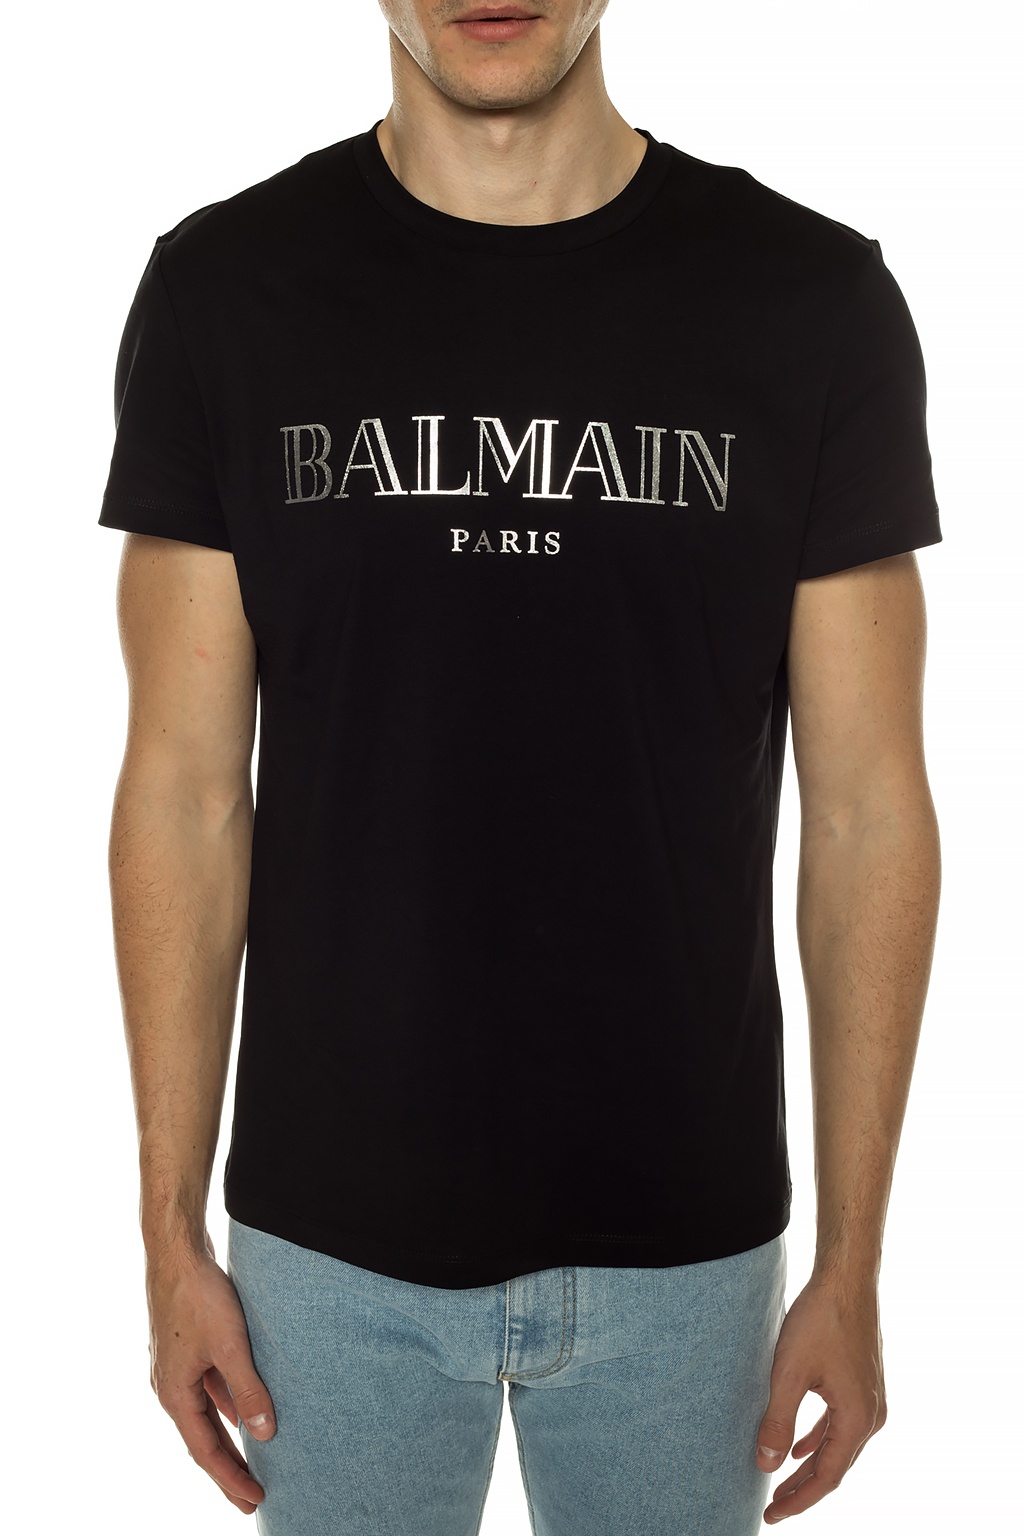 balmain paris t shirt price in india